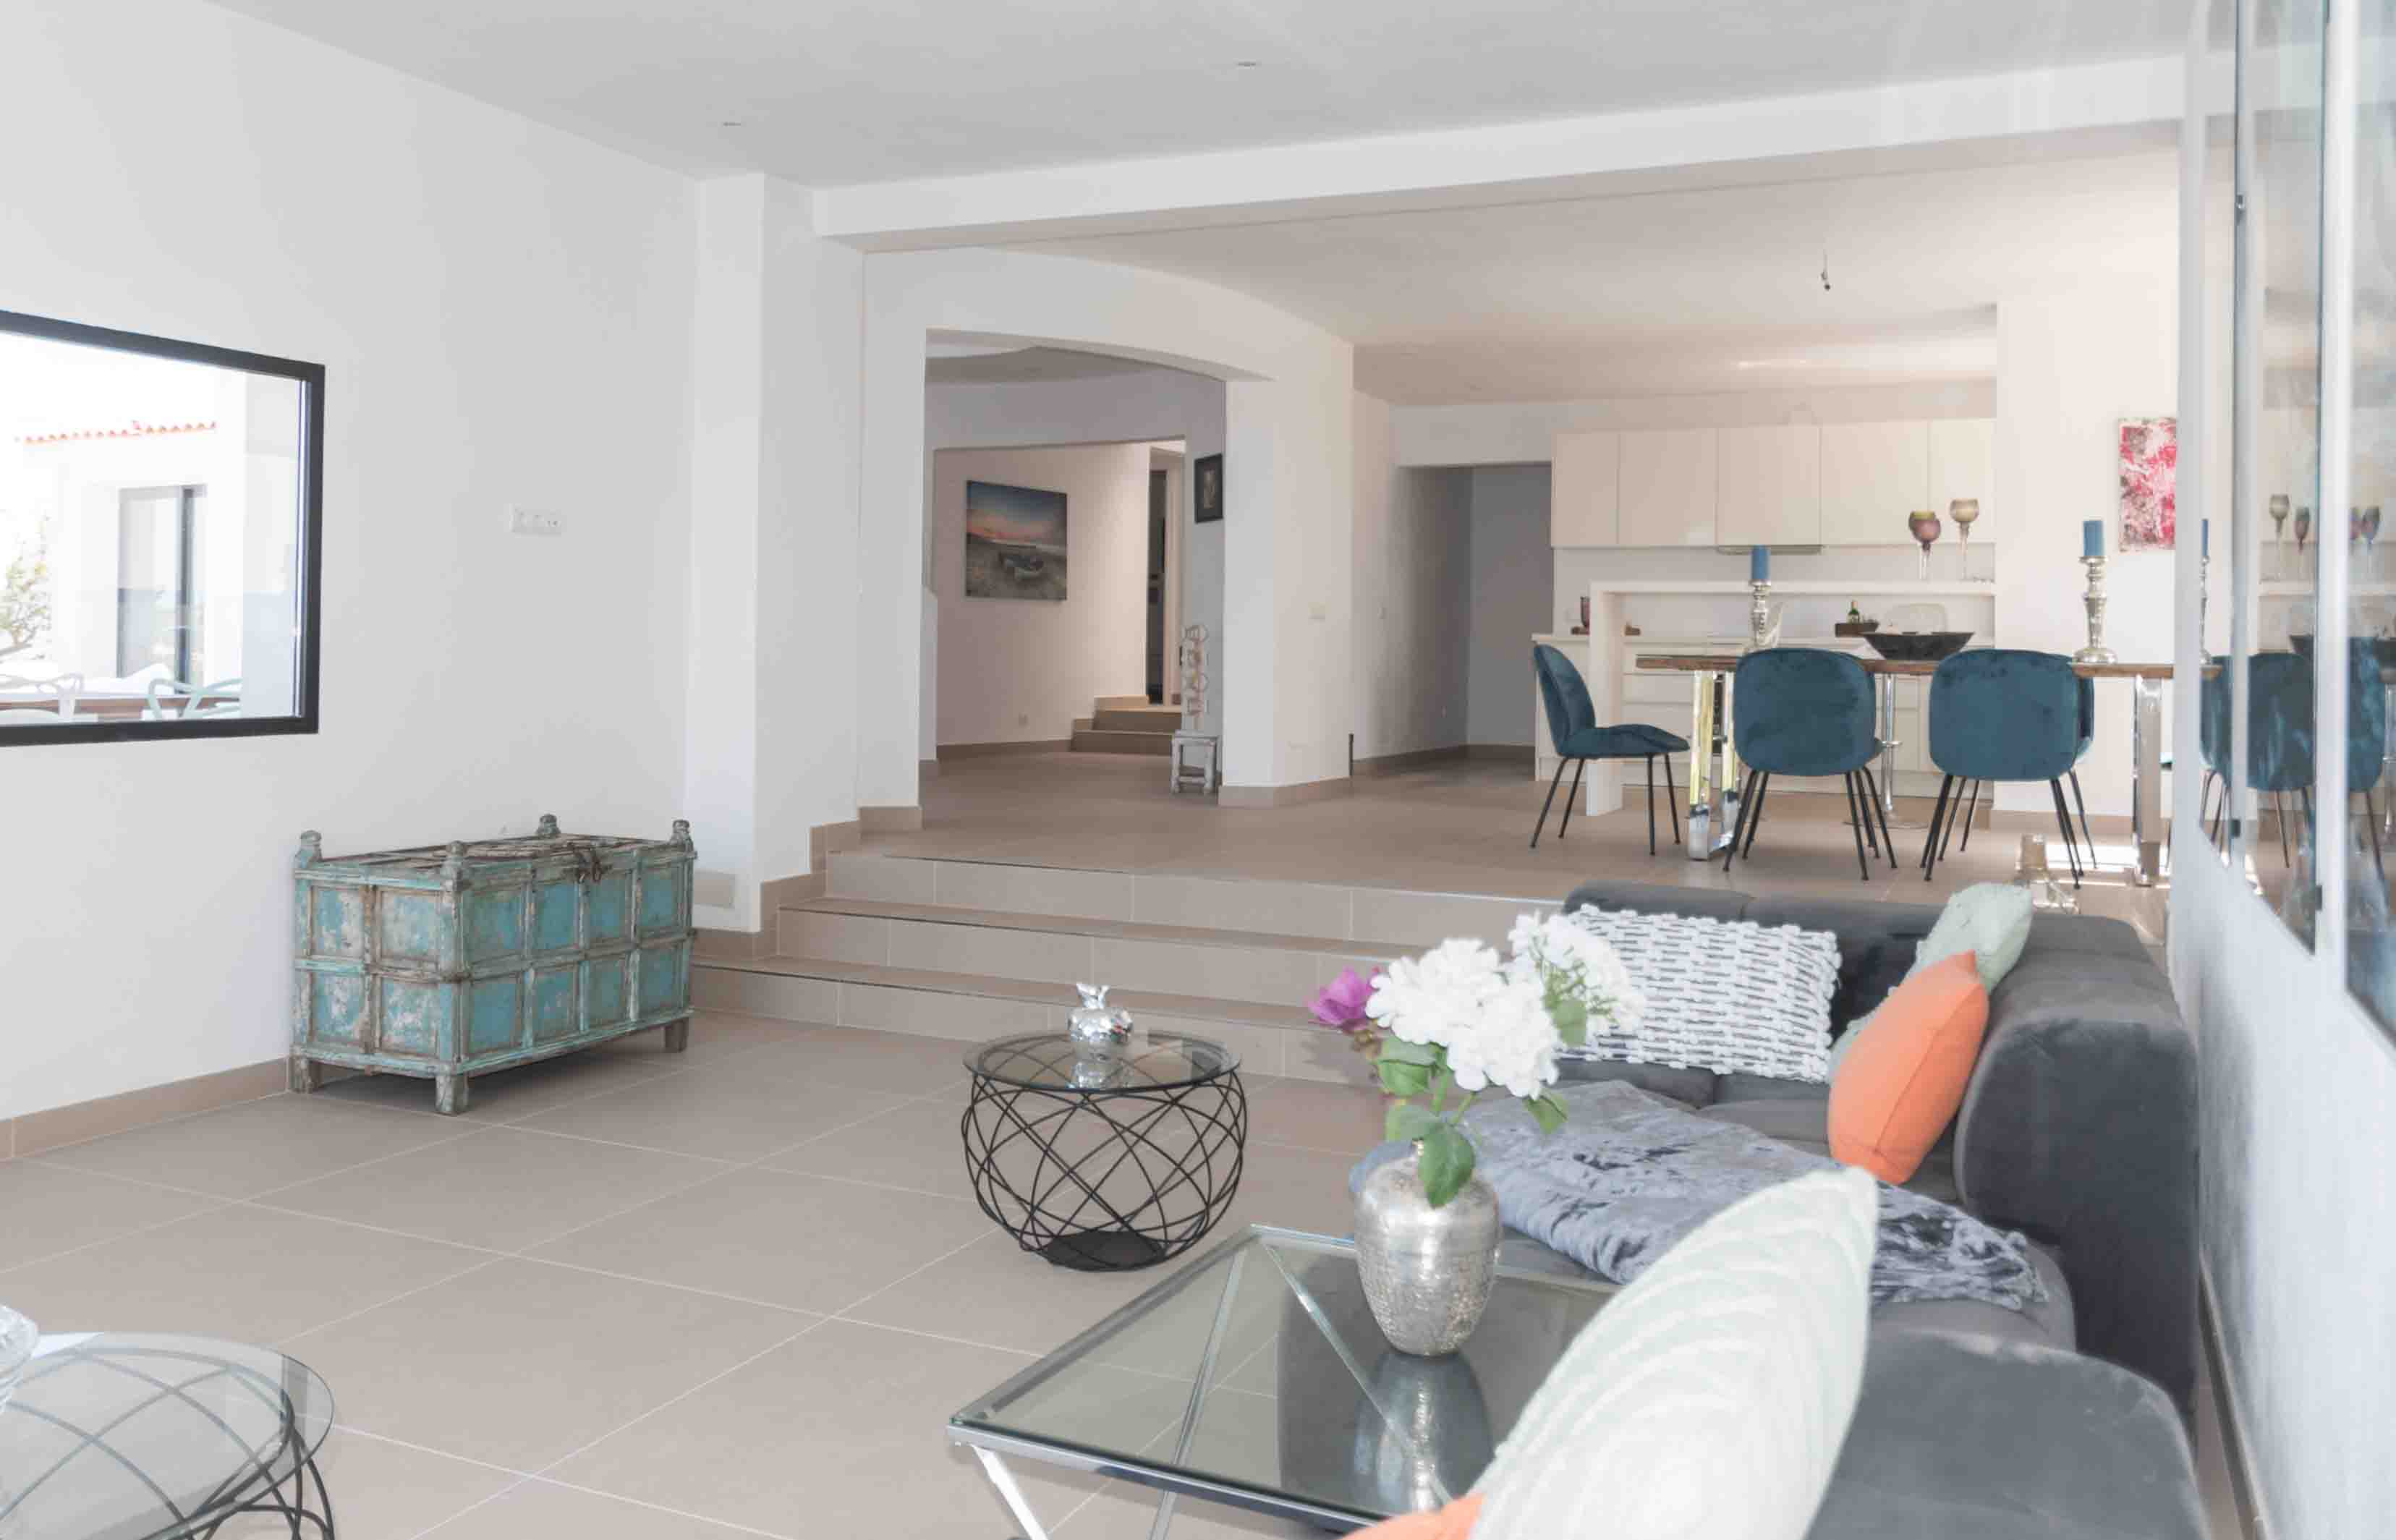 Modern renovated villa in Cala Moli with fantastic sea views